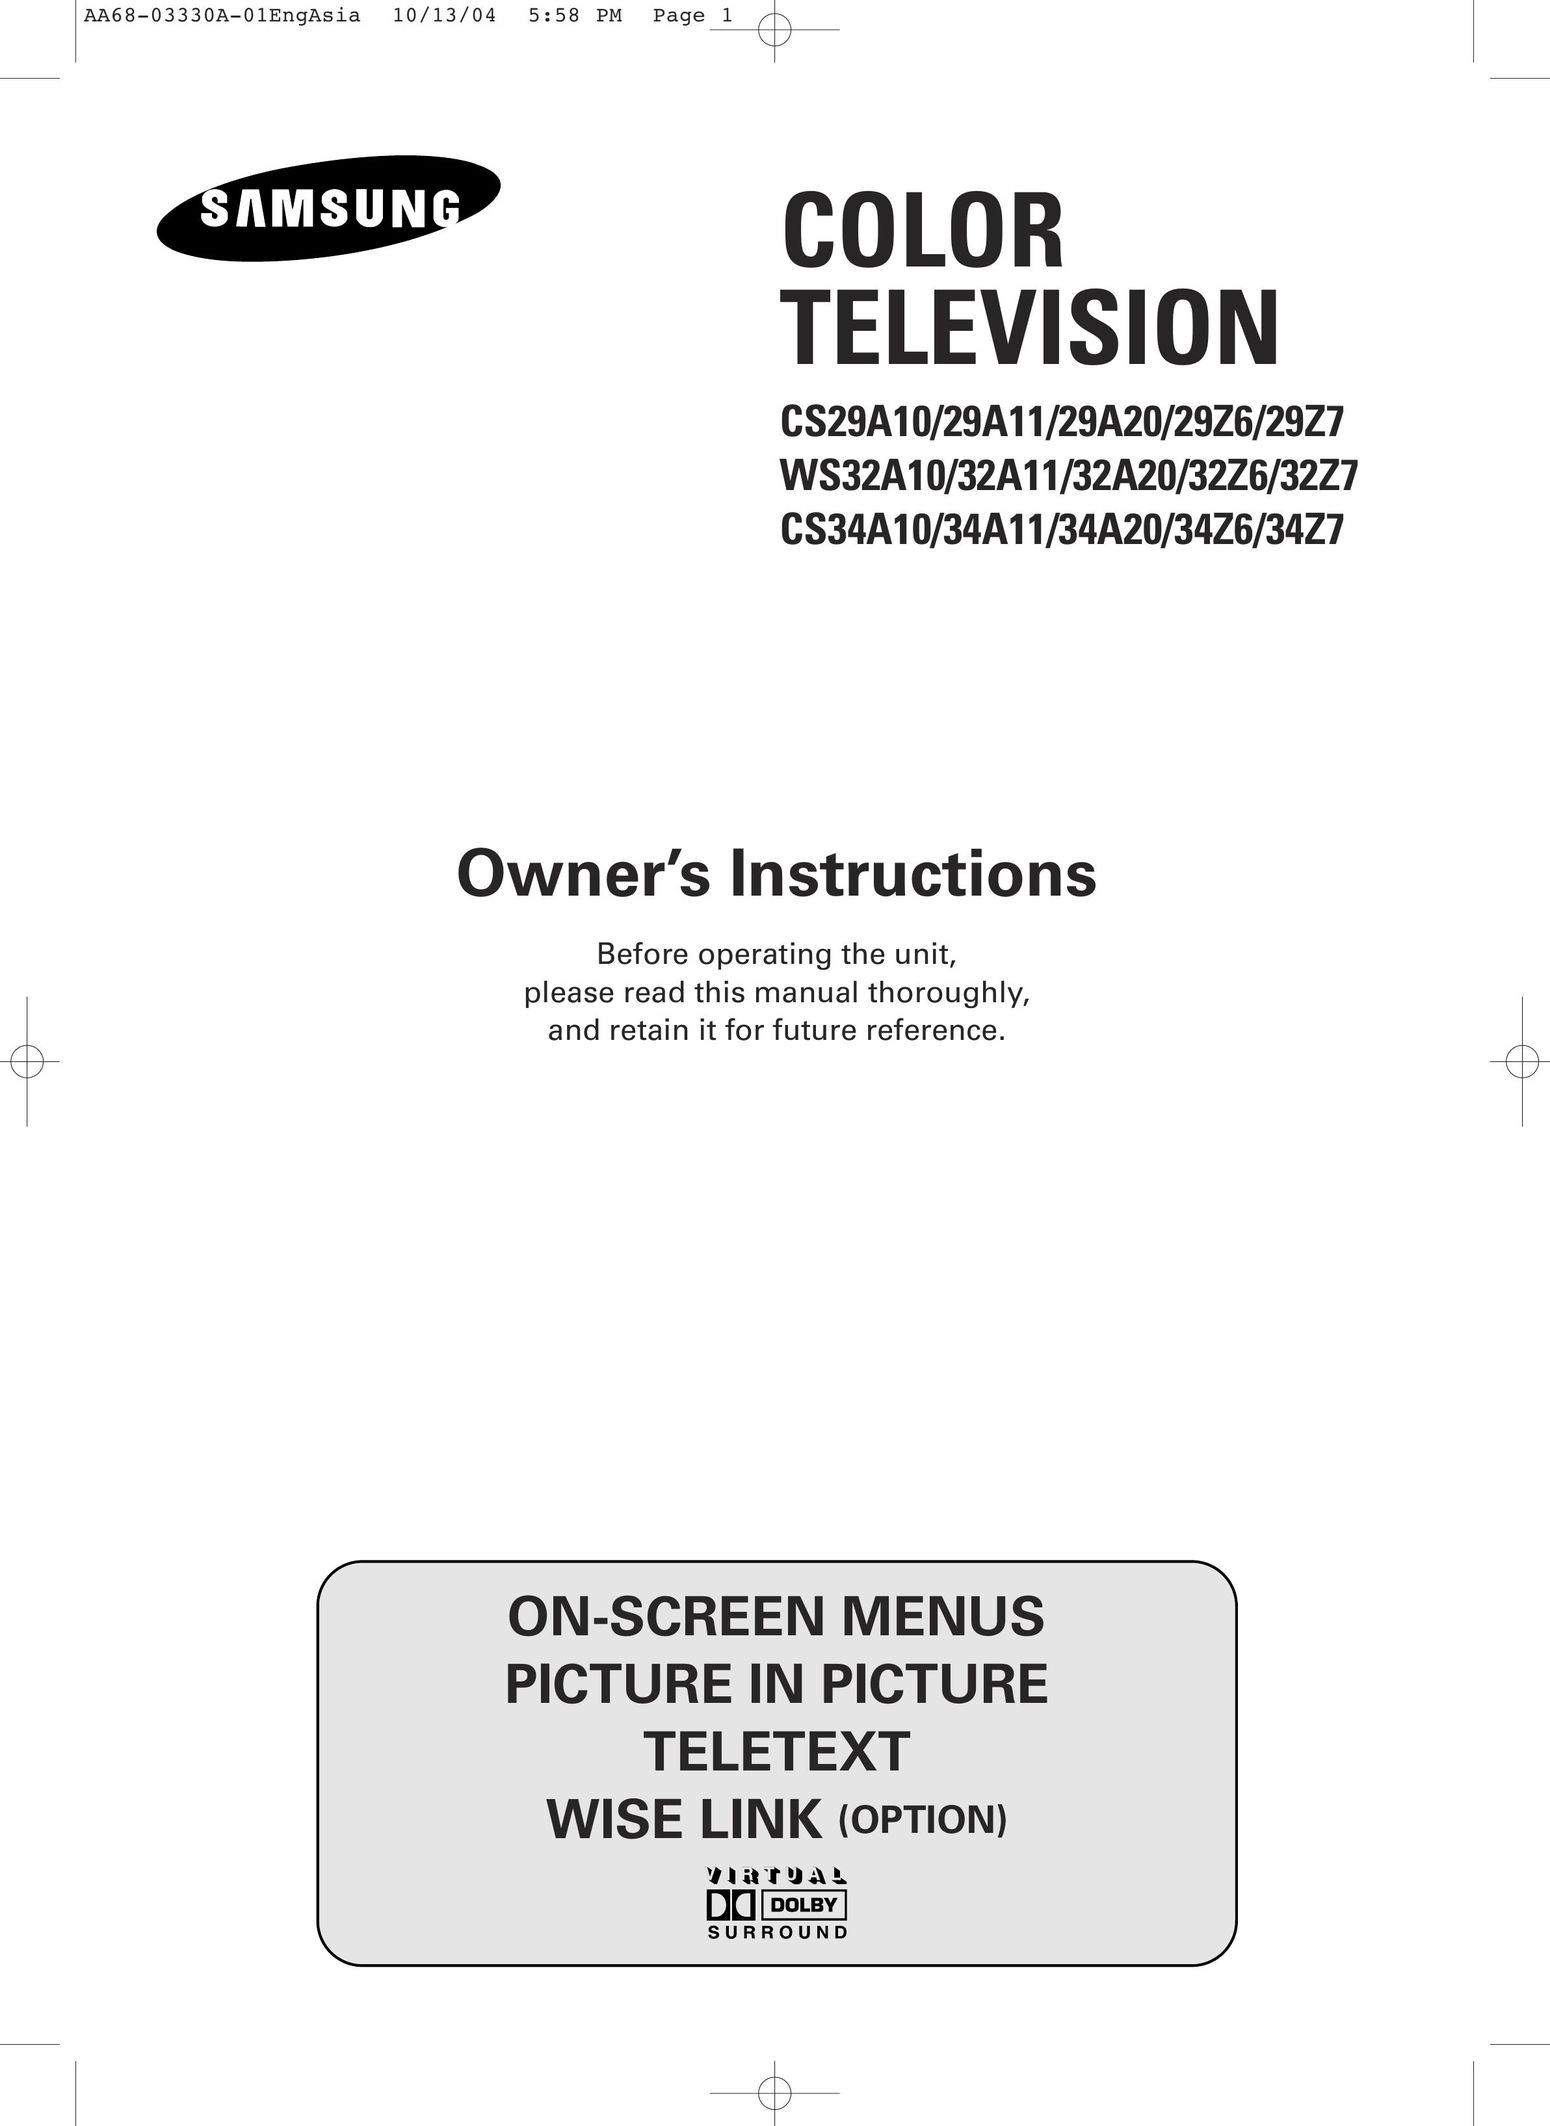 Samsung 29A20 CRT Television User Manual